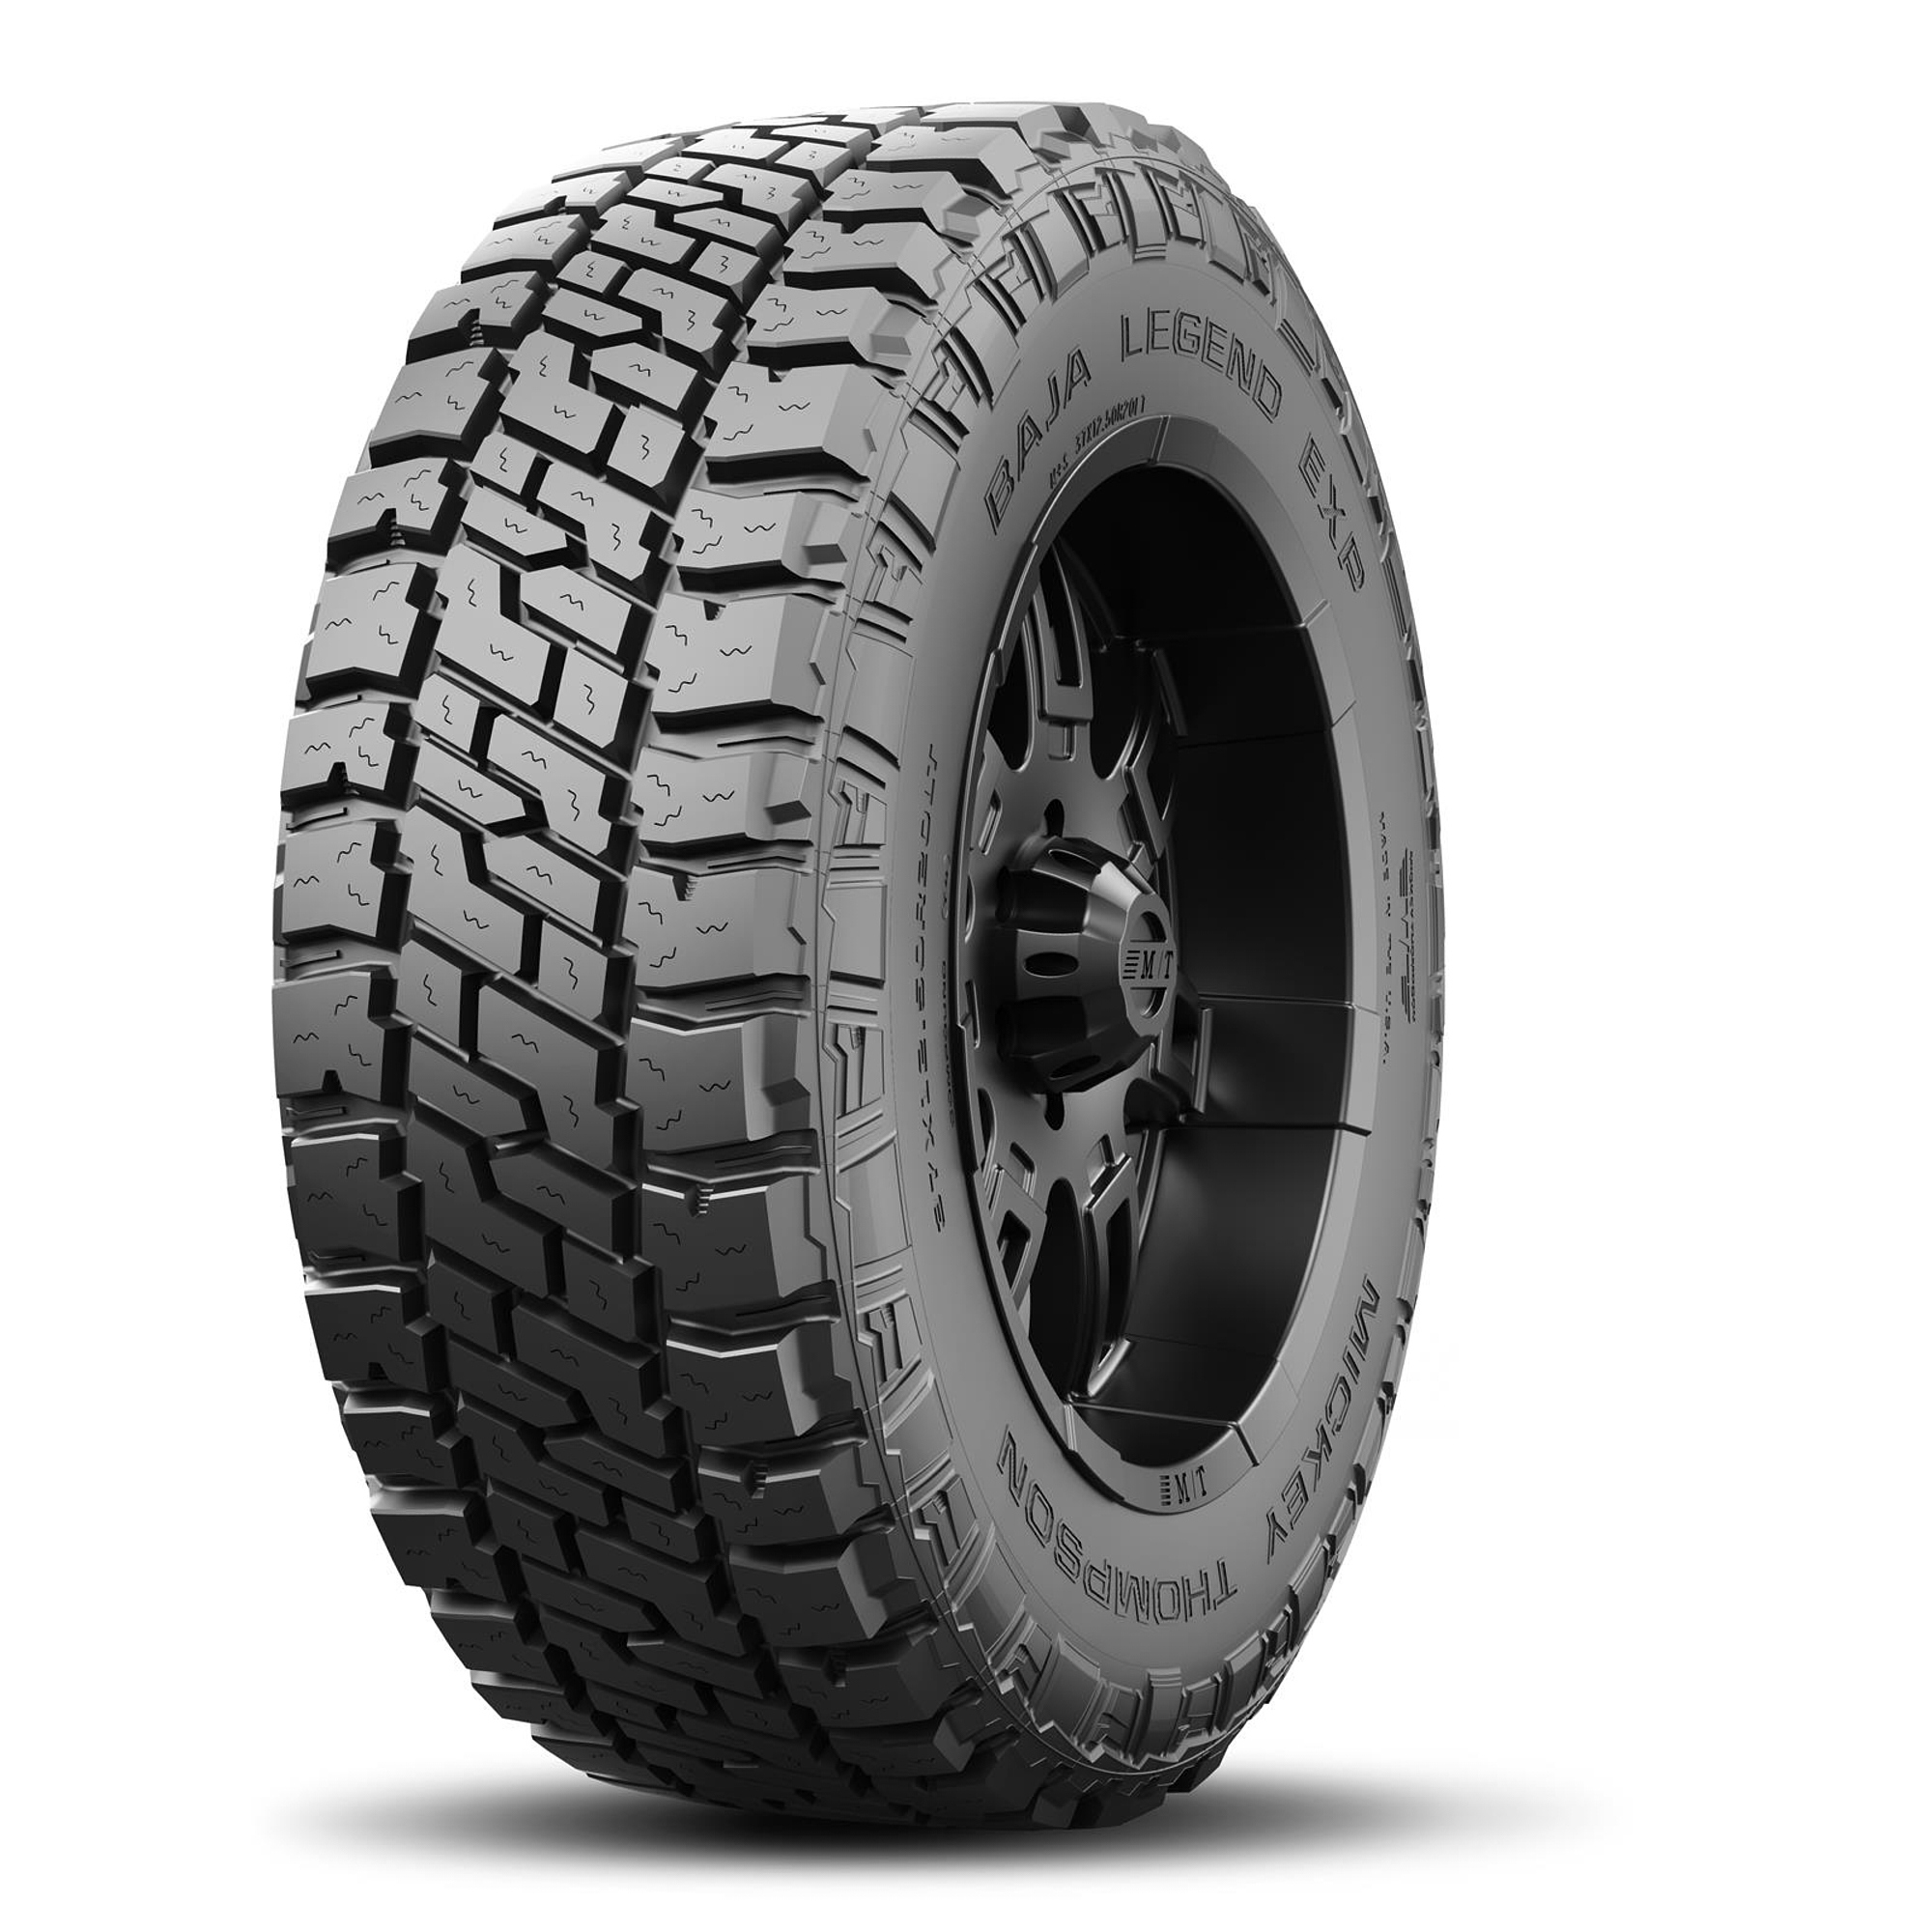 Baja Legend EXP Tire LT285/55R20 122/119Q - 247537